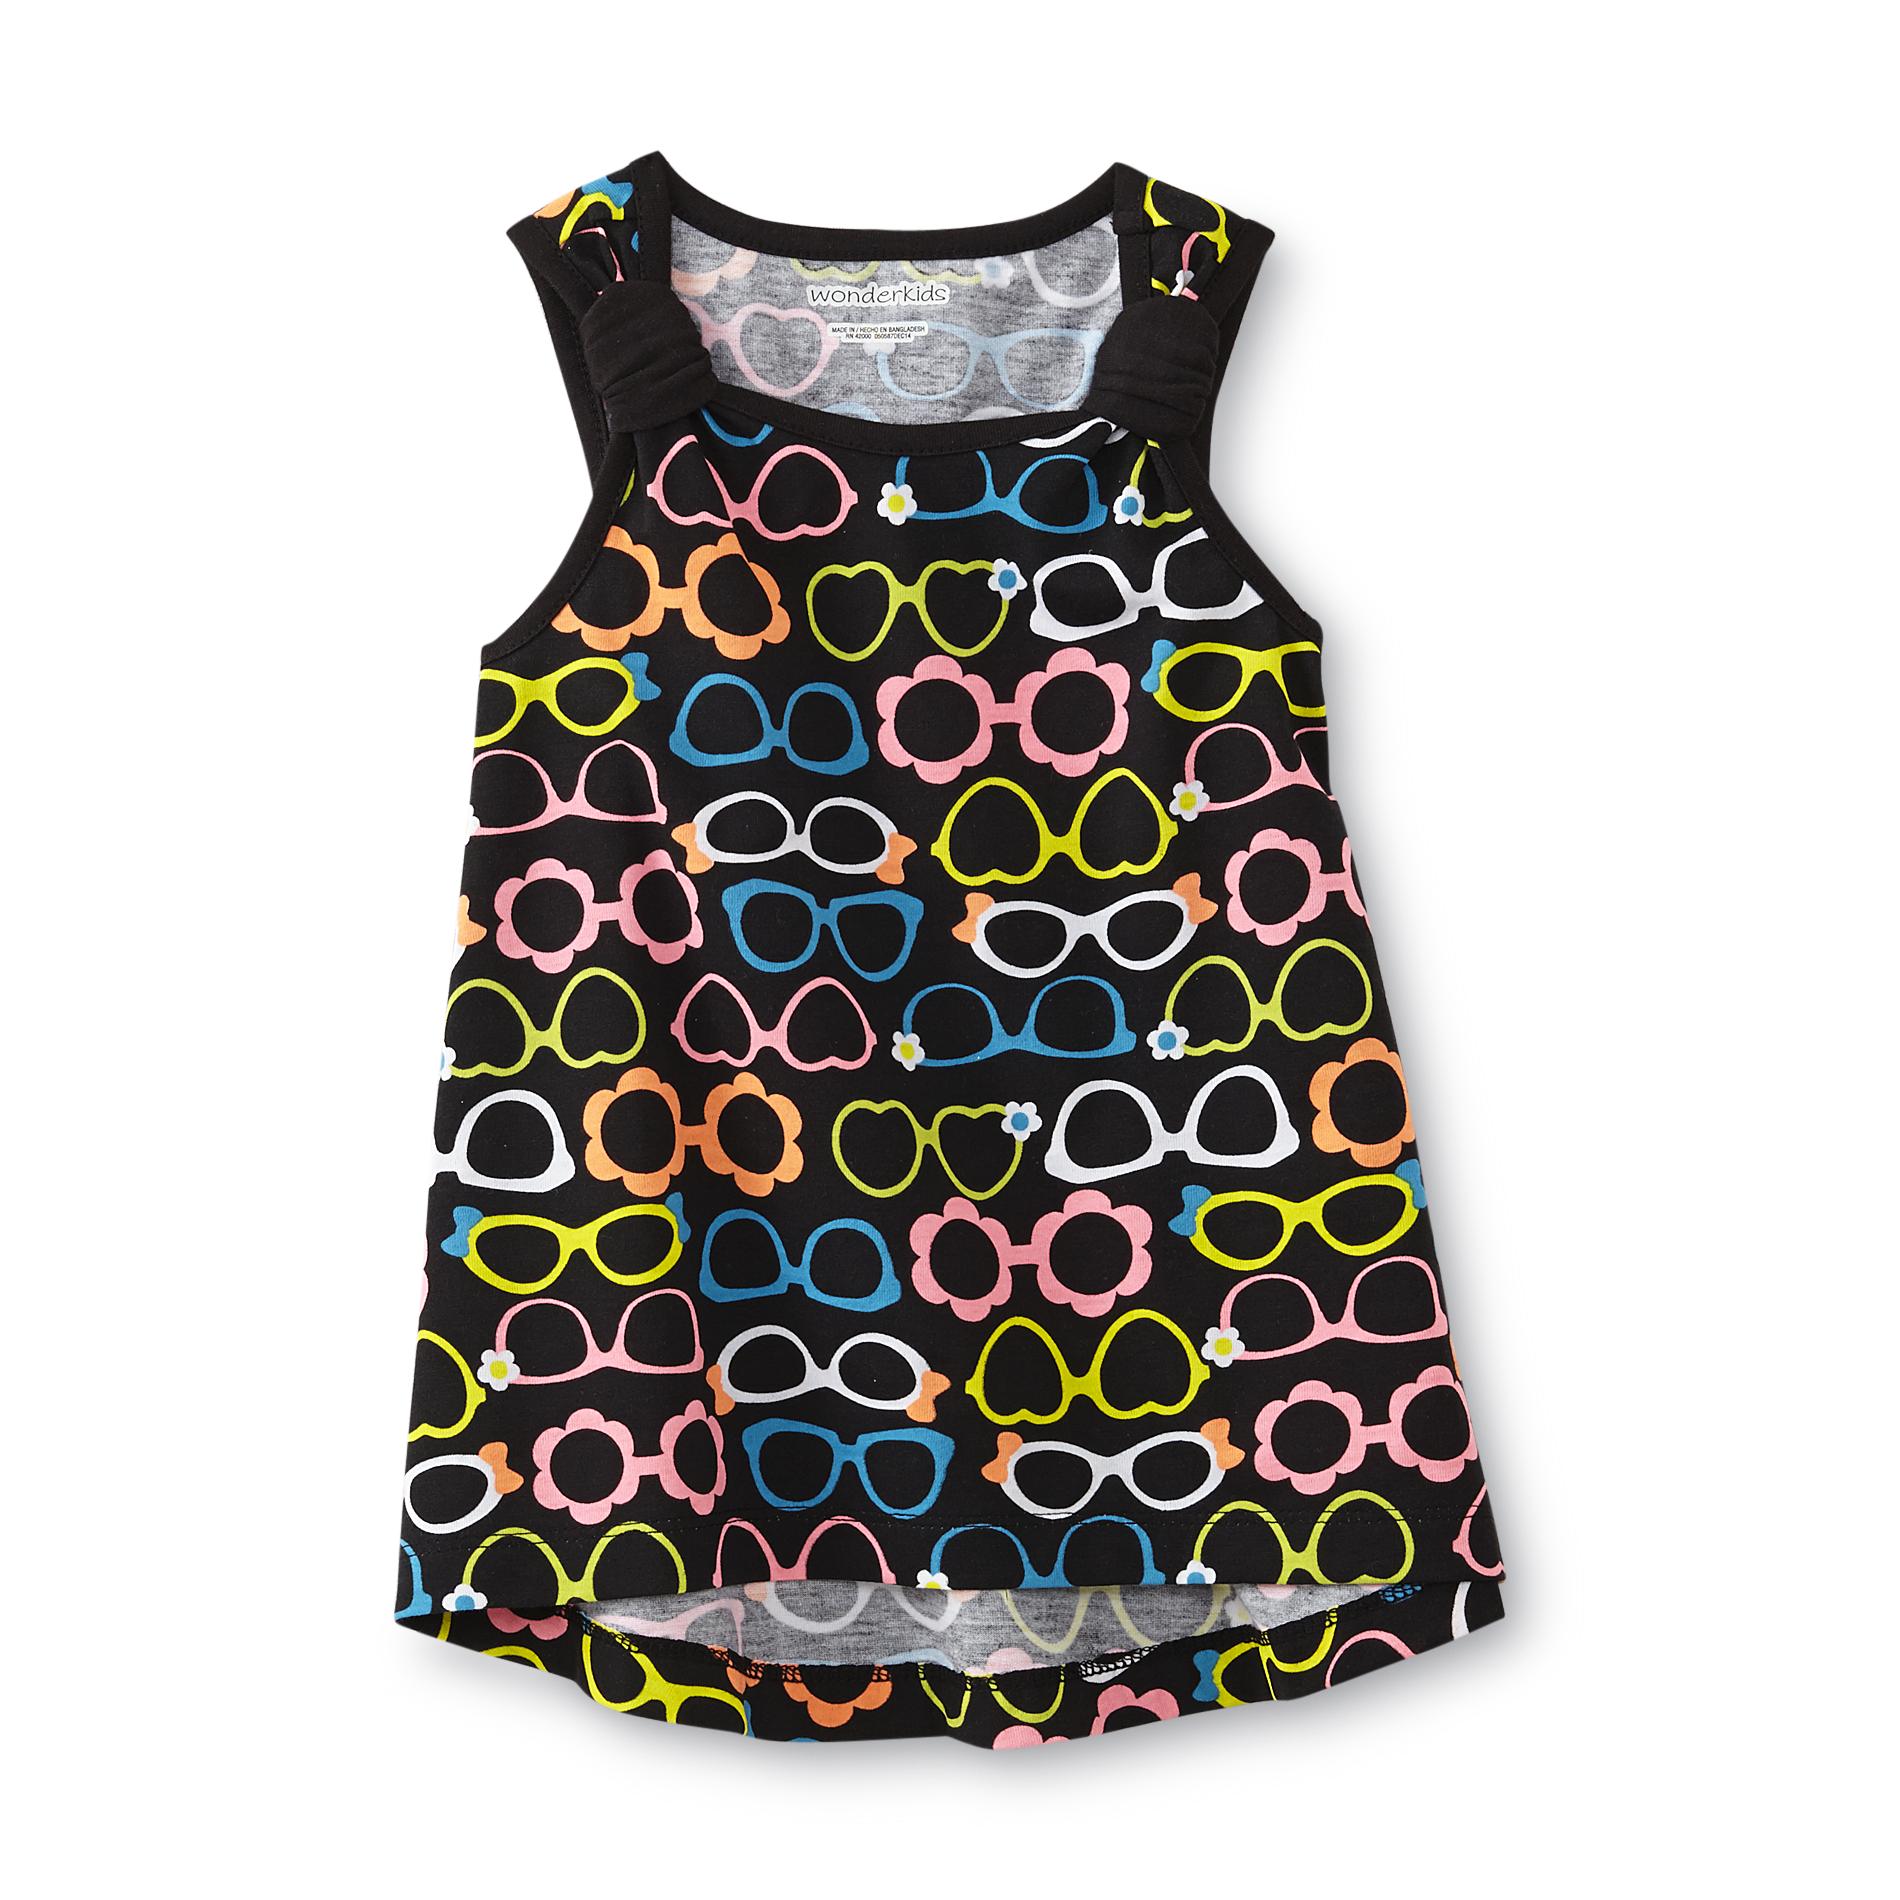 WonderKids Toddler Girl's Tank Top - Sunglasses